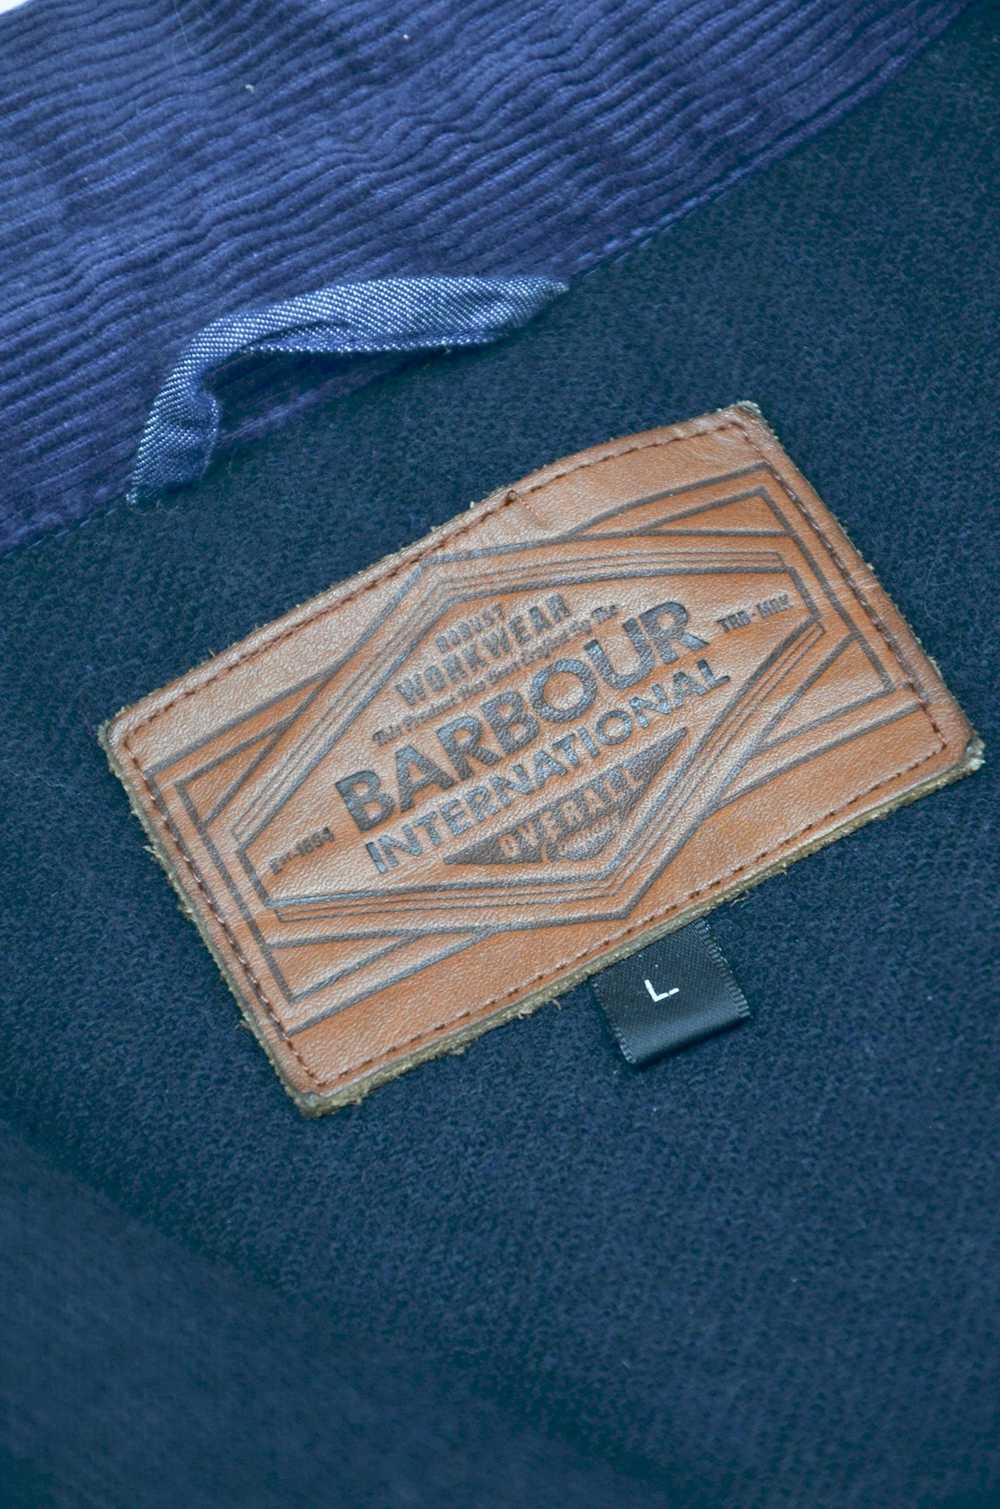 Barbour BARBOUR International Blue Quilted Jacket - image 9